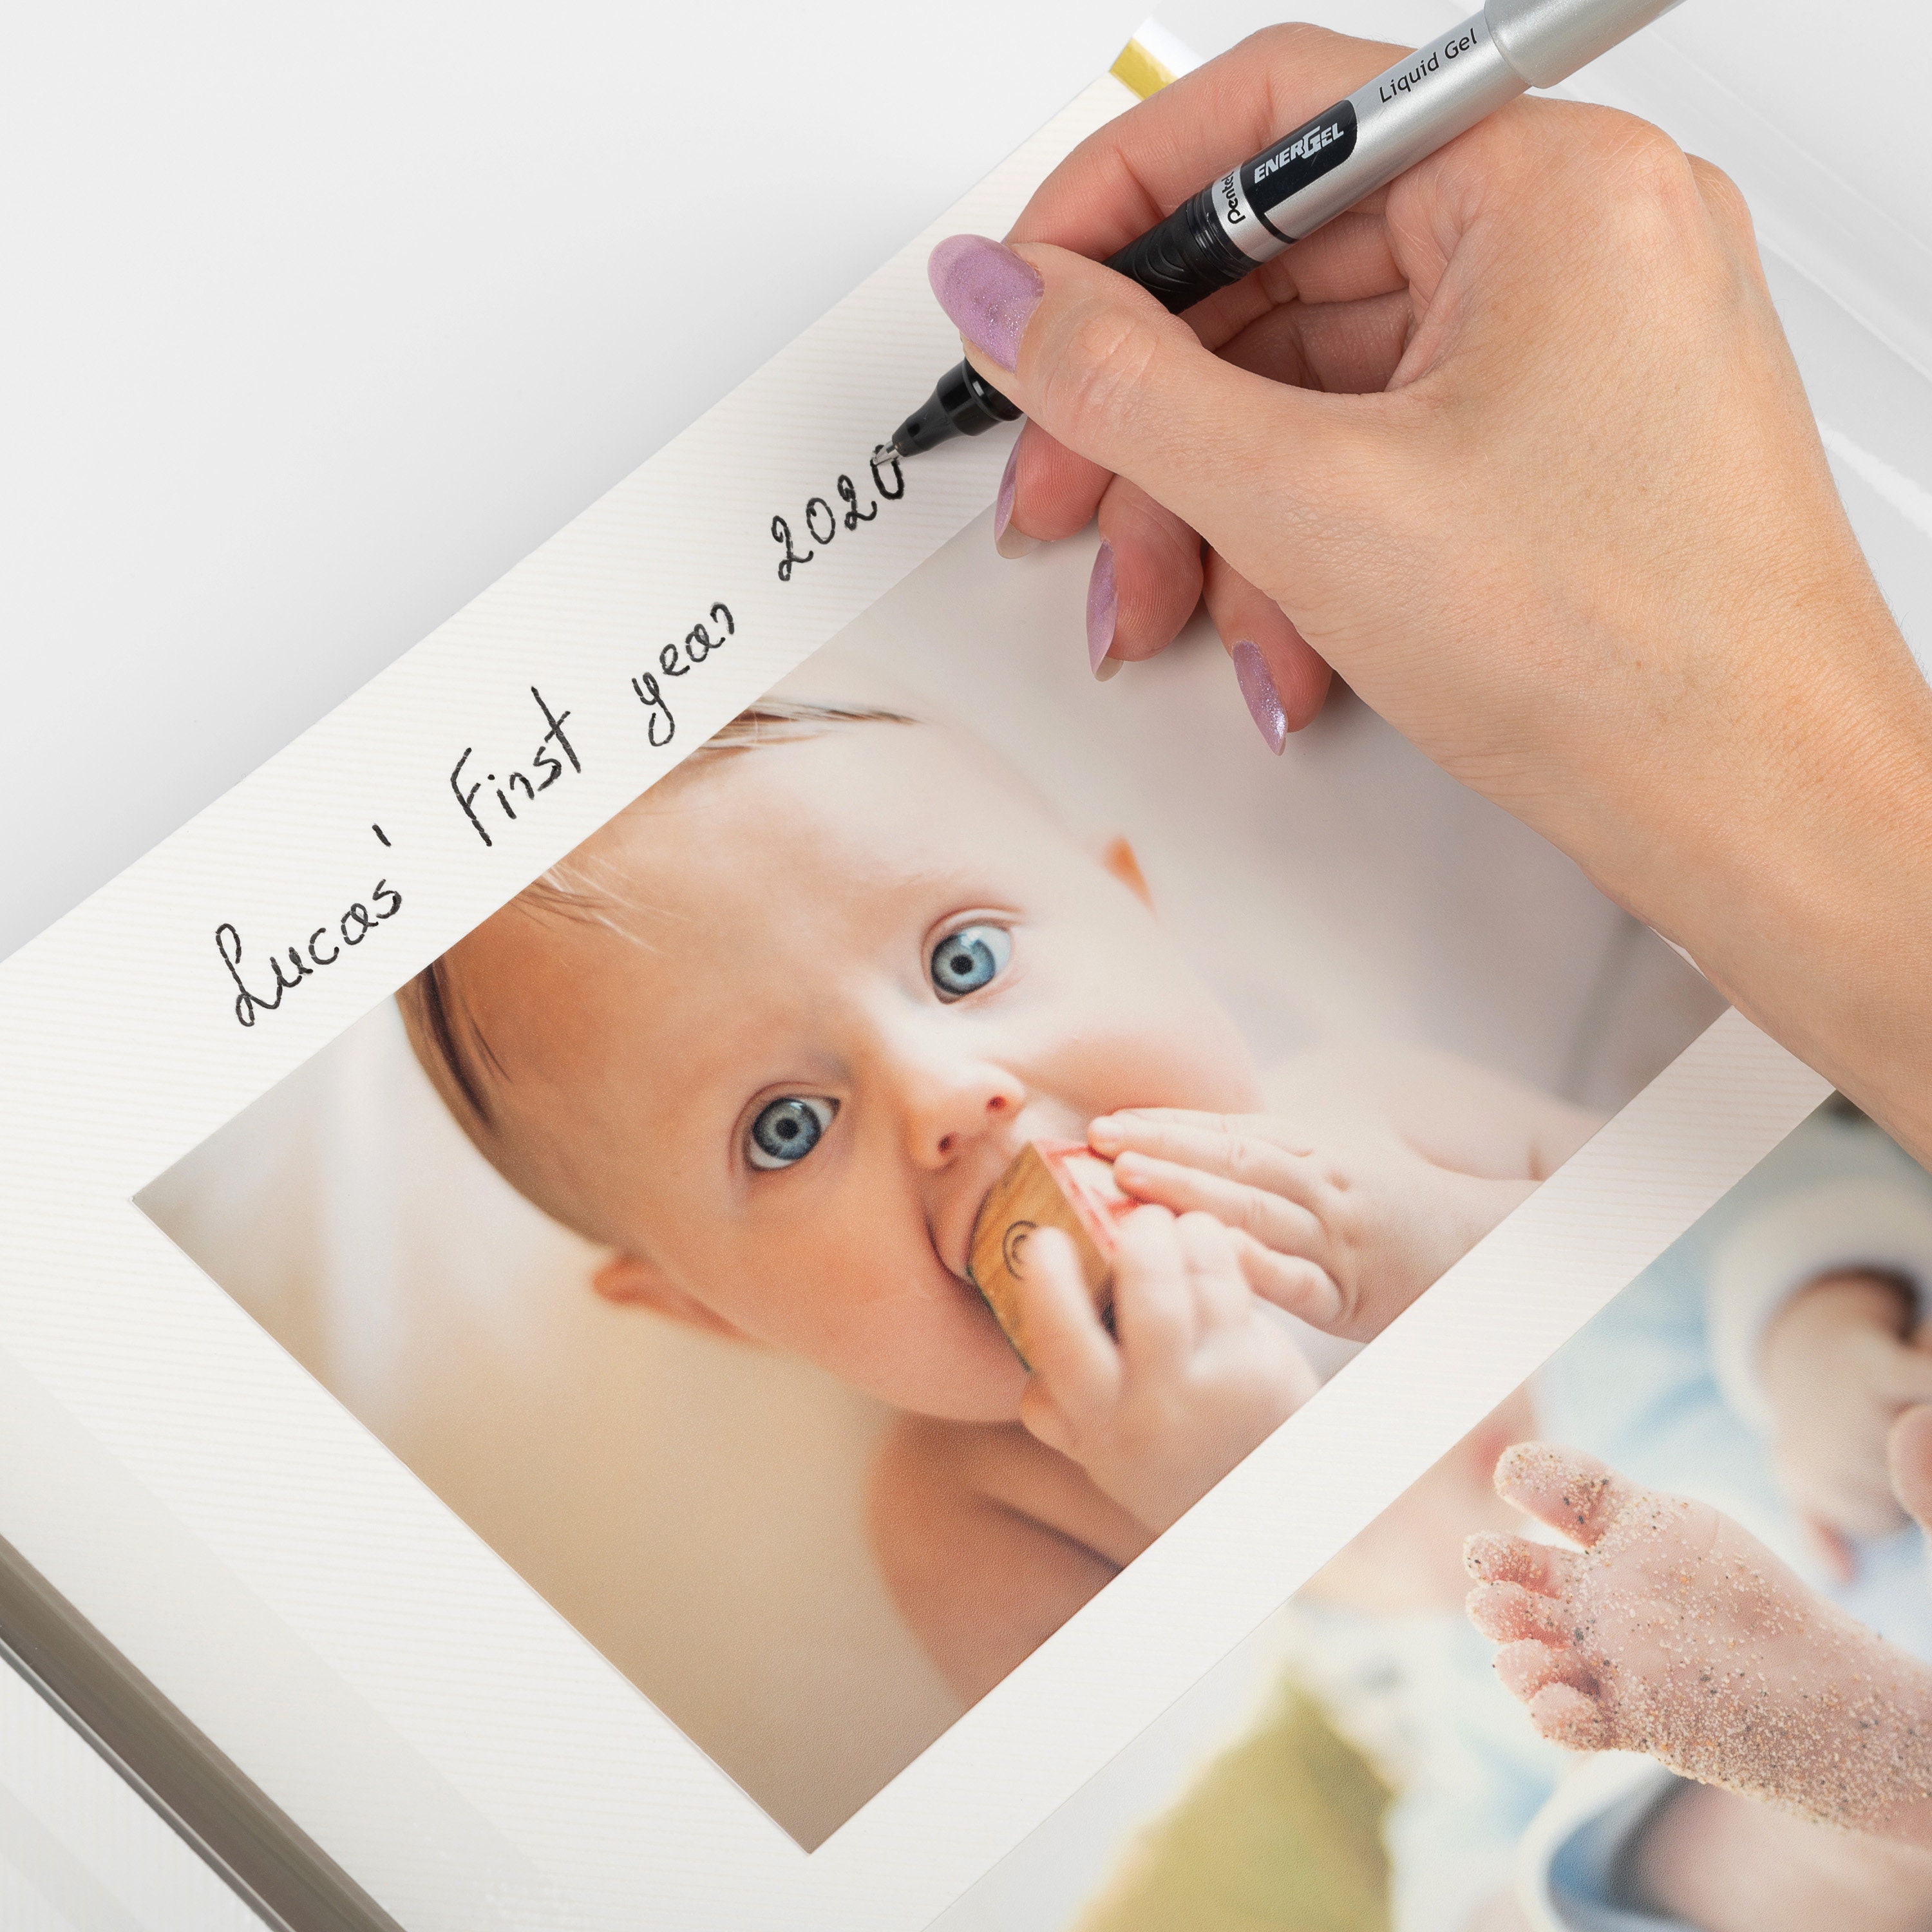 Self-adhesive Baby Photo Album, Baby Memory Book, Baby Scrapbook With Photo  Window, Best Baby Birthday Gift Made by Arcoalbum 